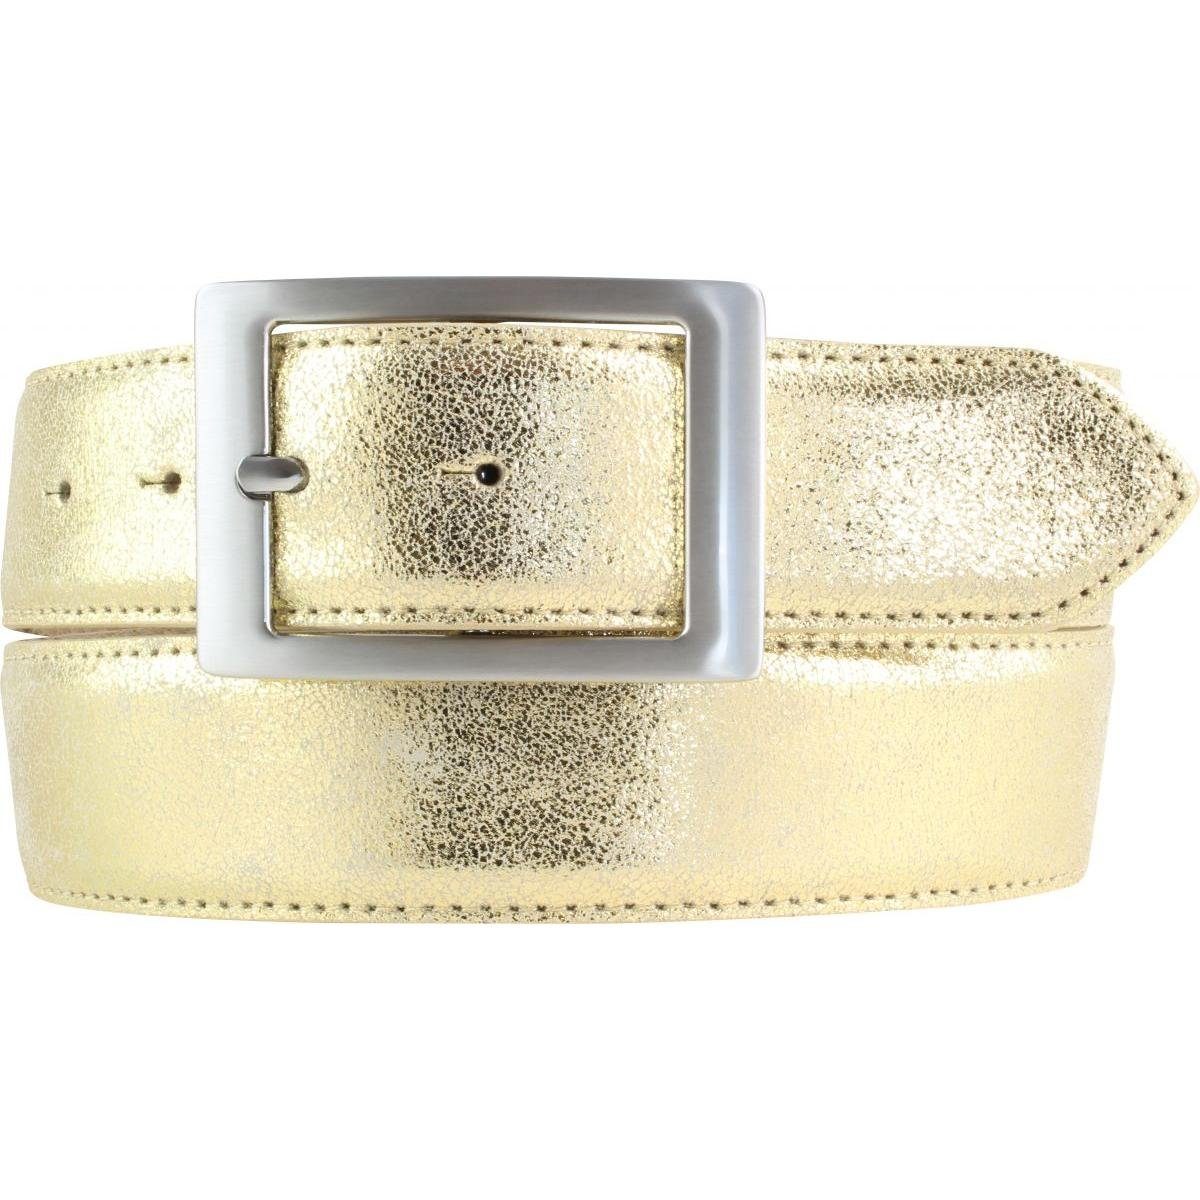 Leder-Gürte Doppel-Schließe 4cm Gold, Hochwertiger BELTINGER Gürtel - Metall-Optik Silber Ledergürtel mit